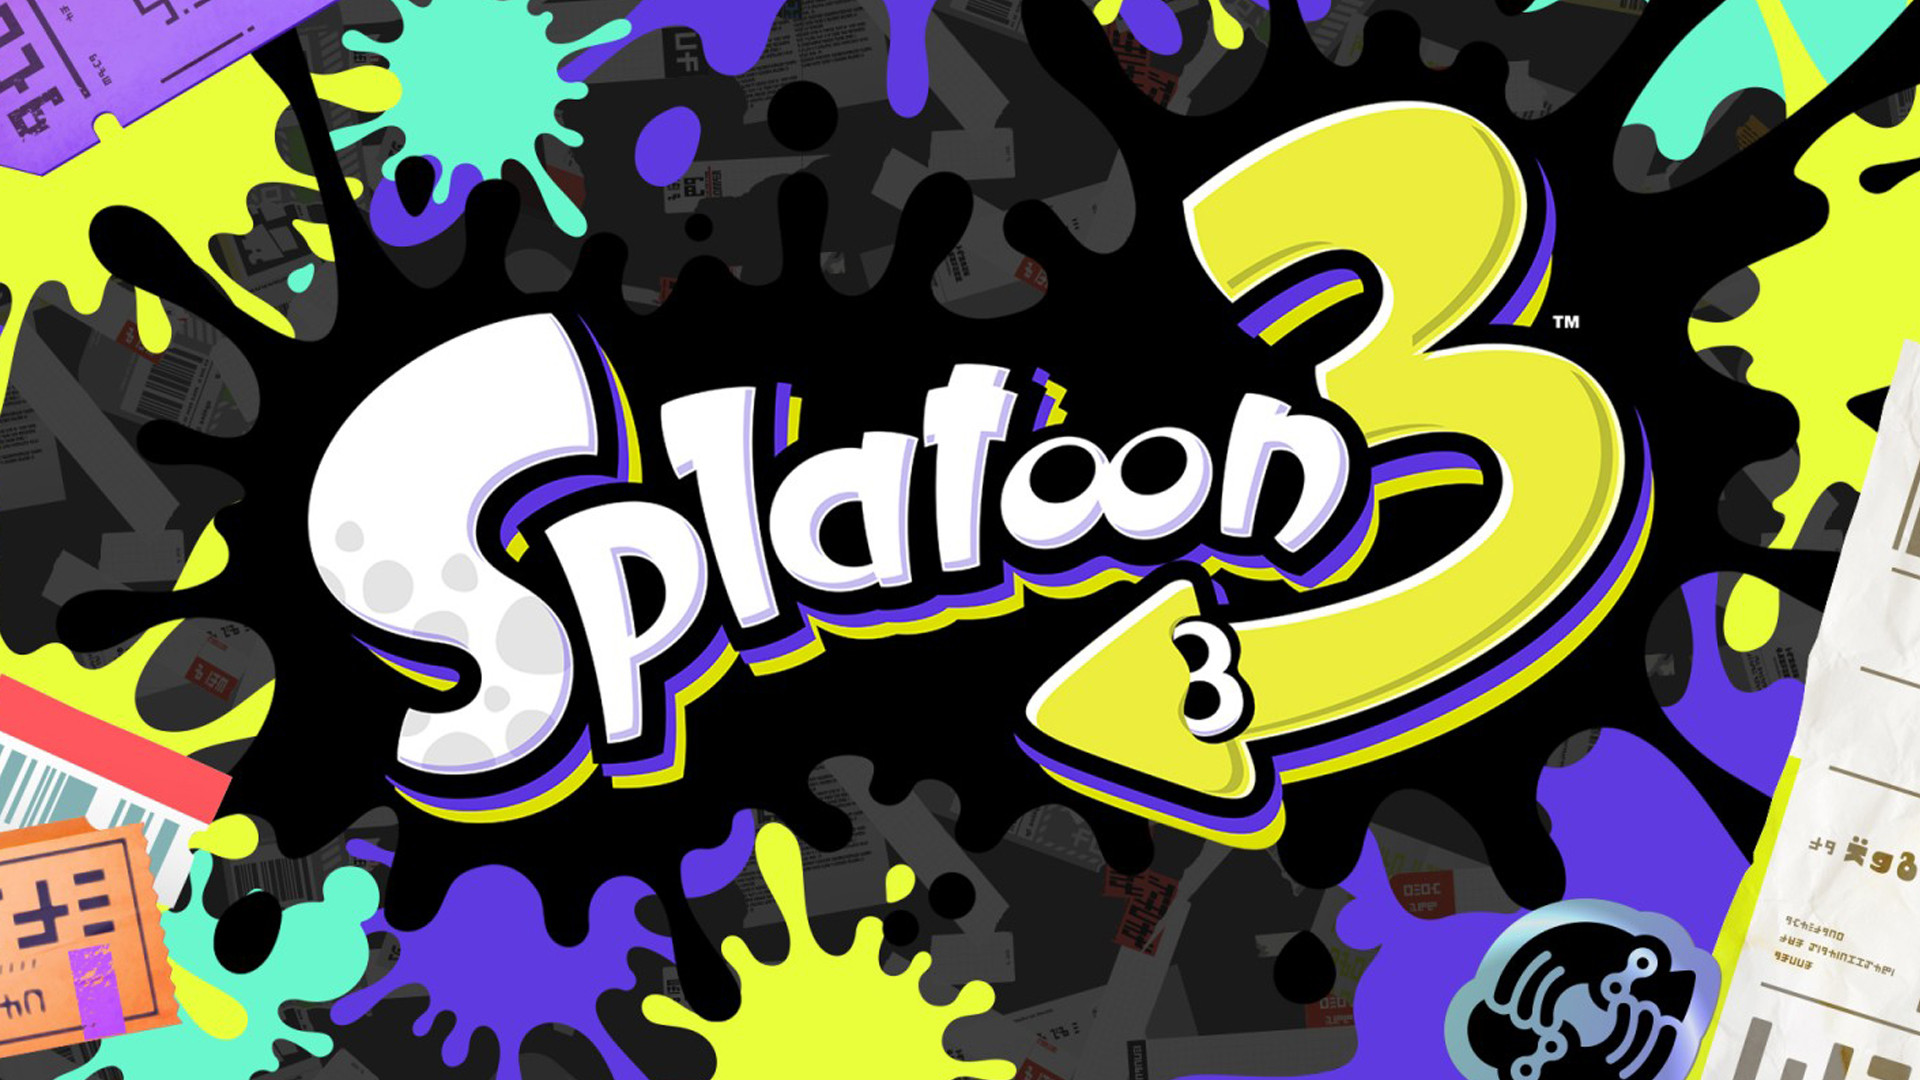 Quand sort Splatoon 3 sur Nintendo Switch ?